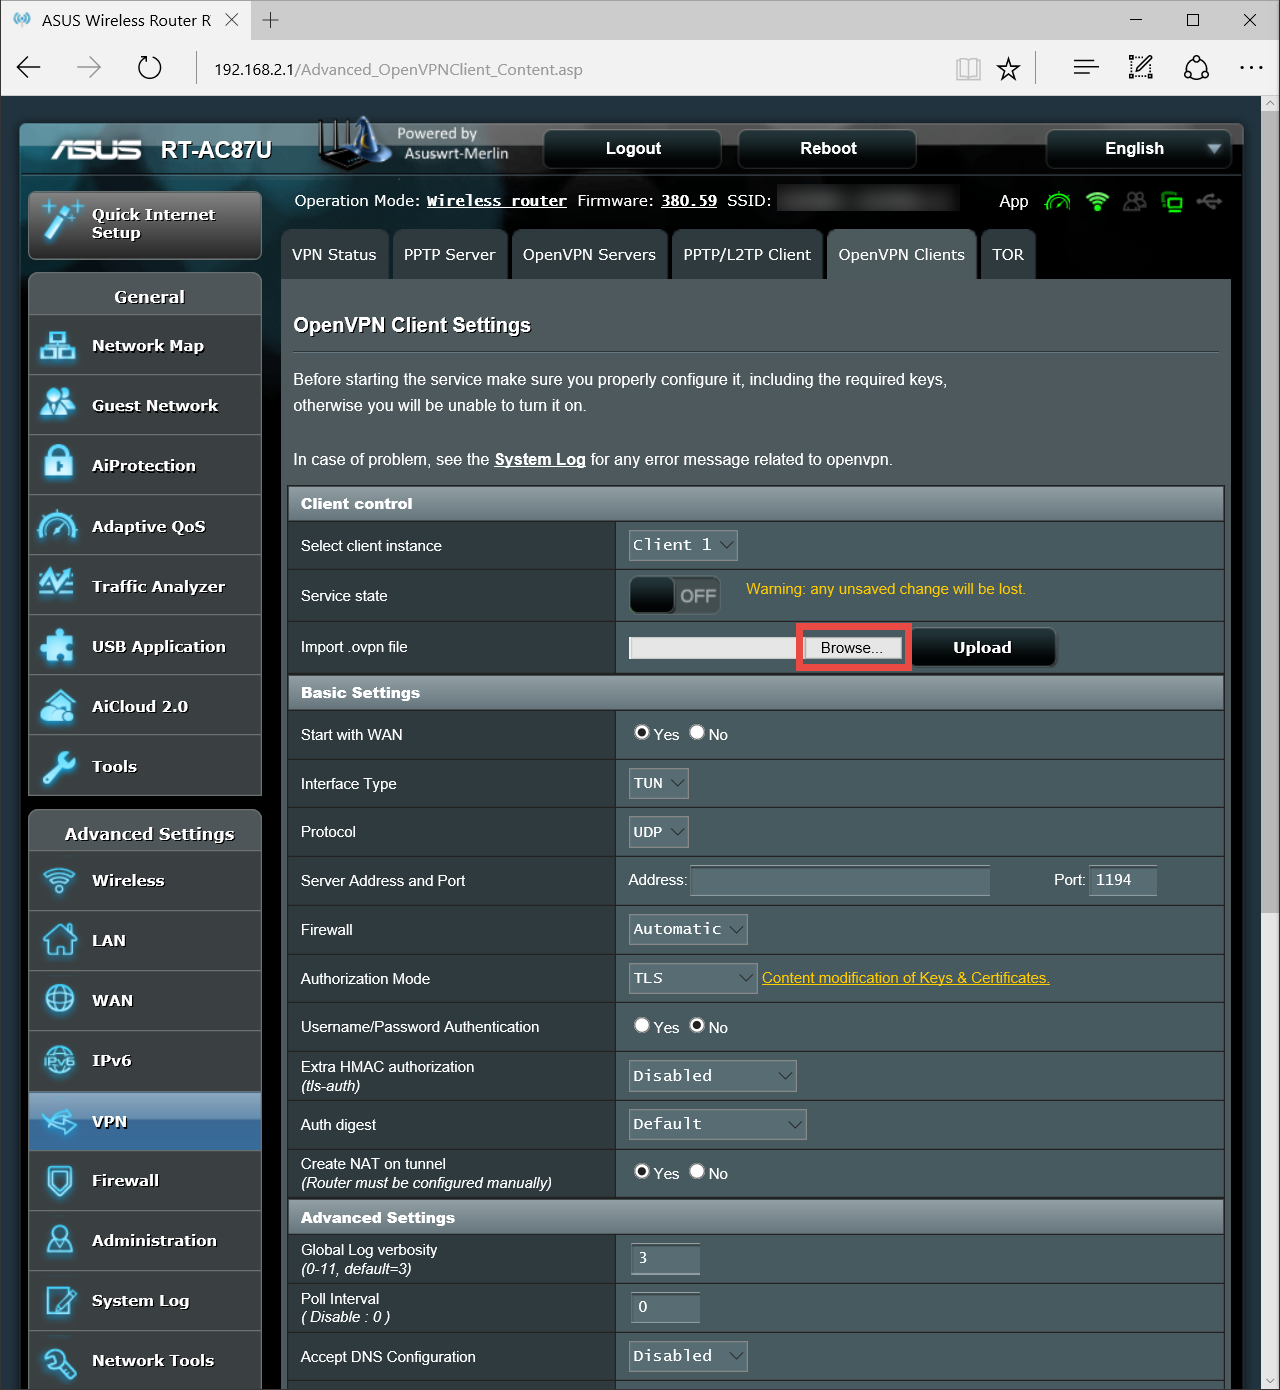 nordvpn settings merlin firmware for asus rt-1900p fastest download